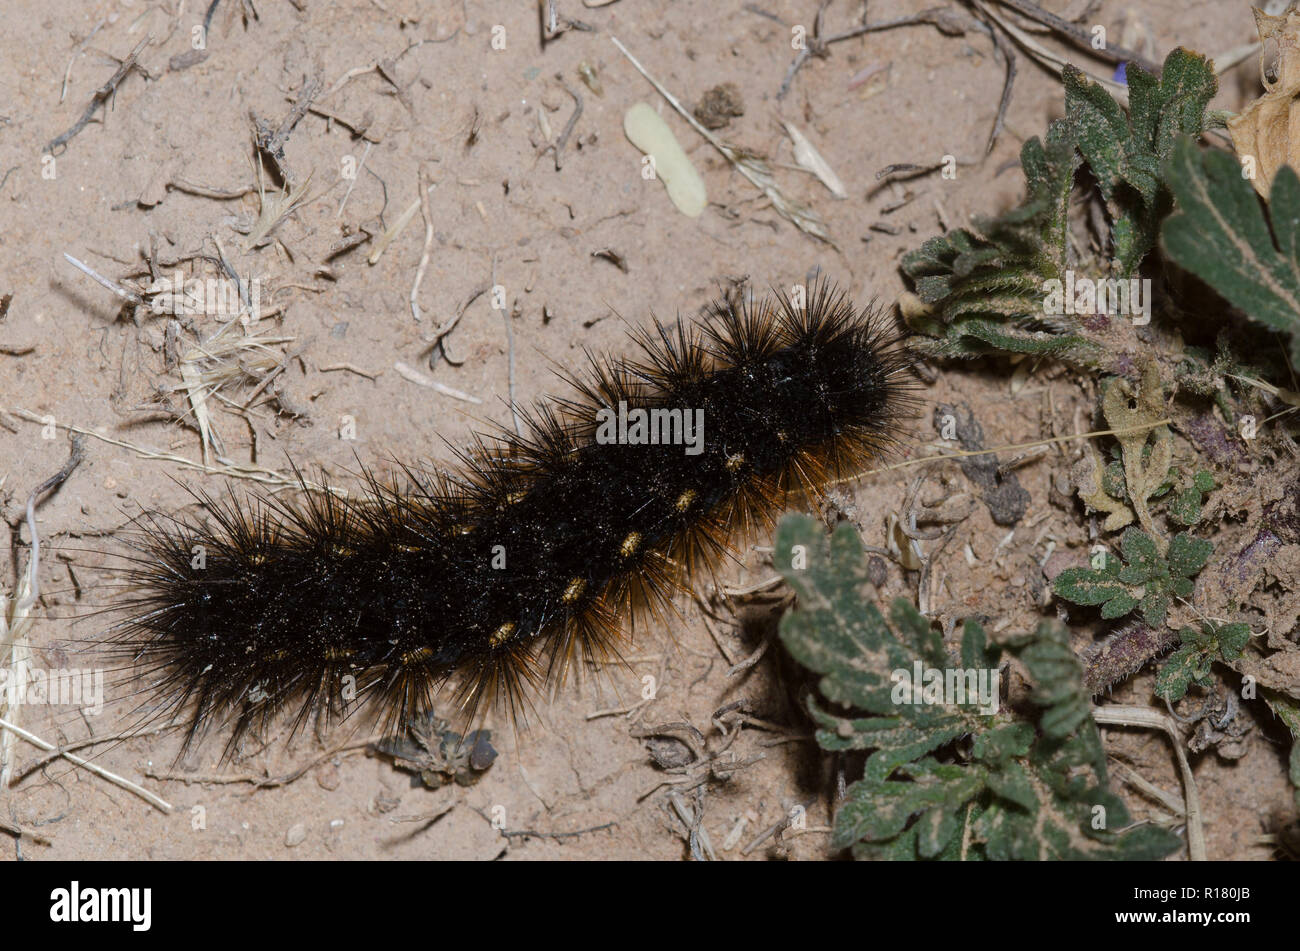 Tiger Moth, Apantesis sp., larva feeding on Vervain, Glandularia sp. Stock Photo